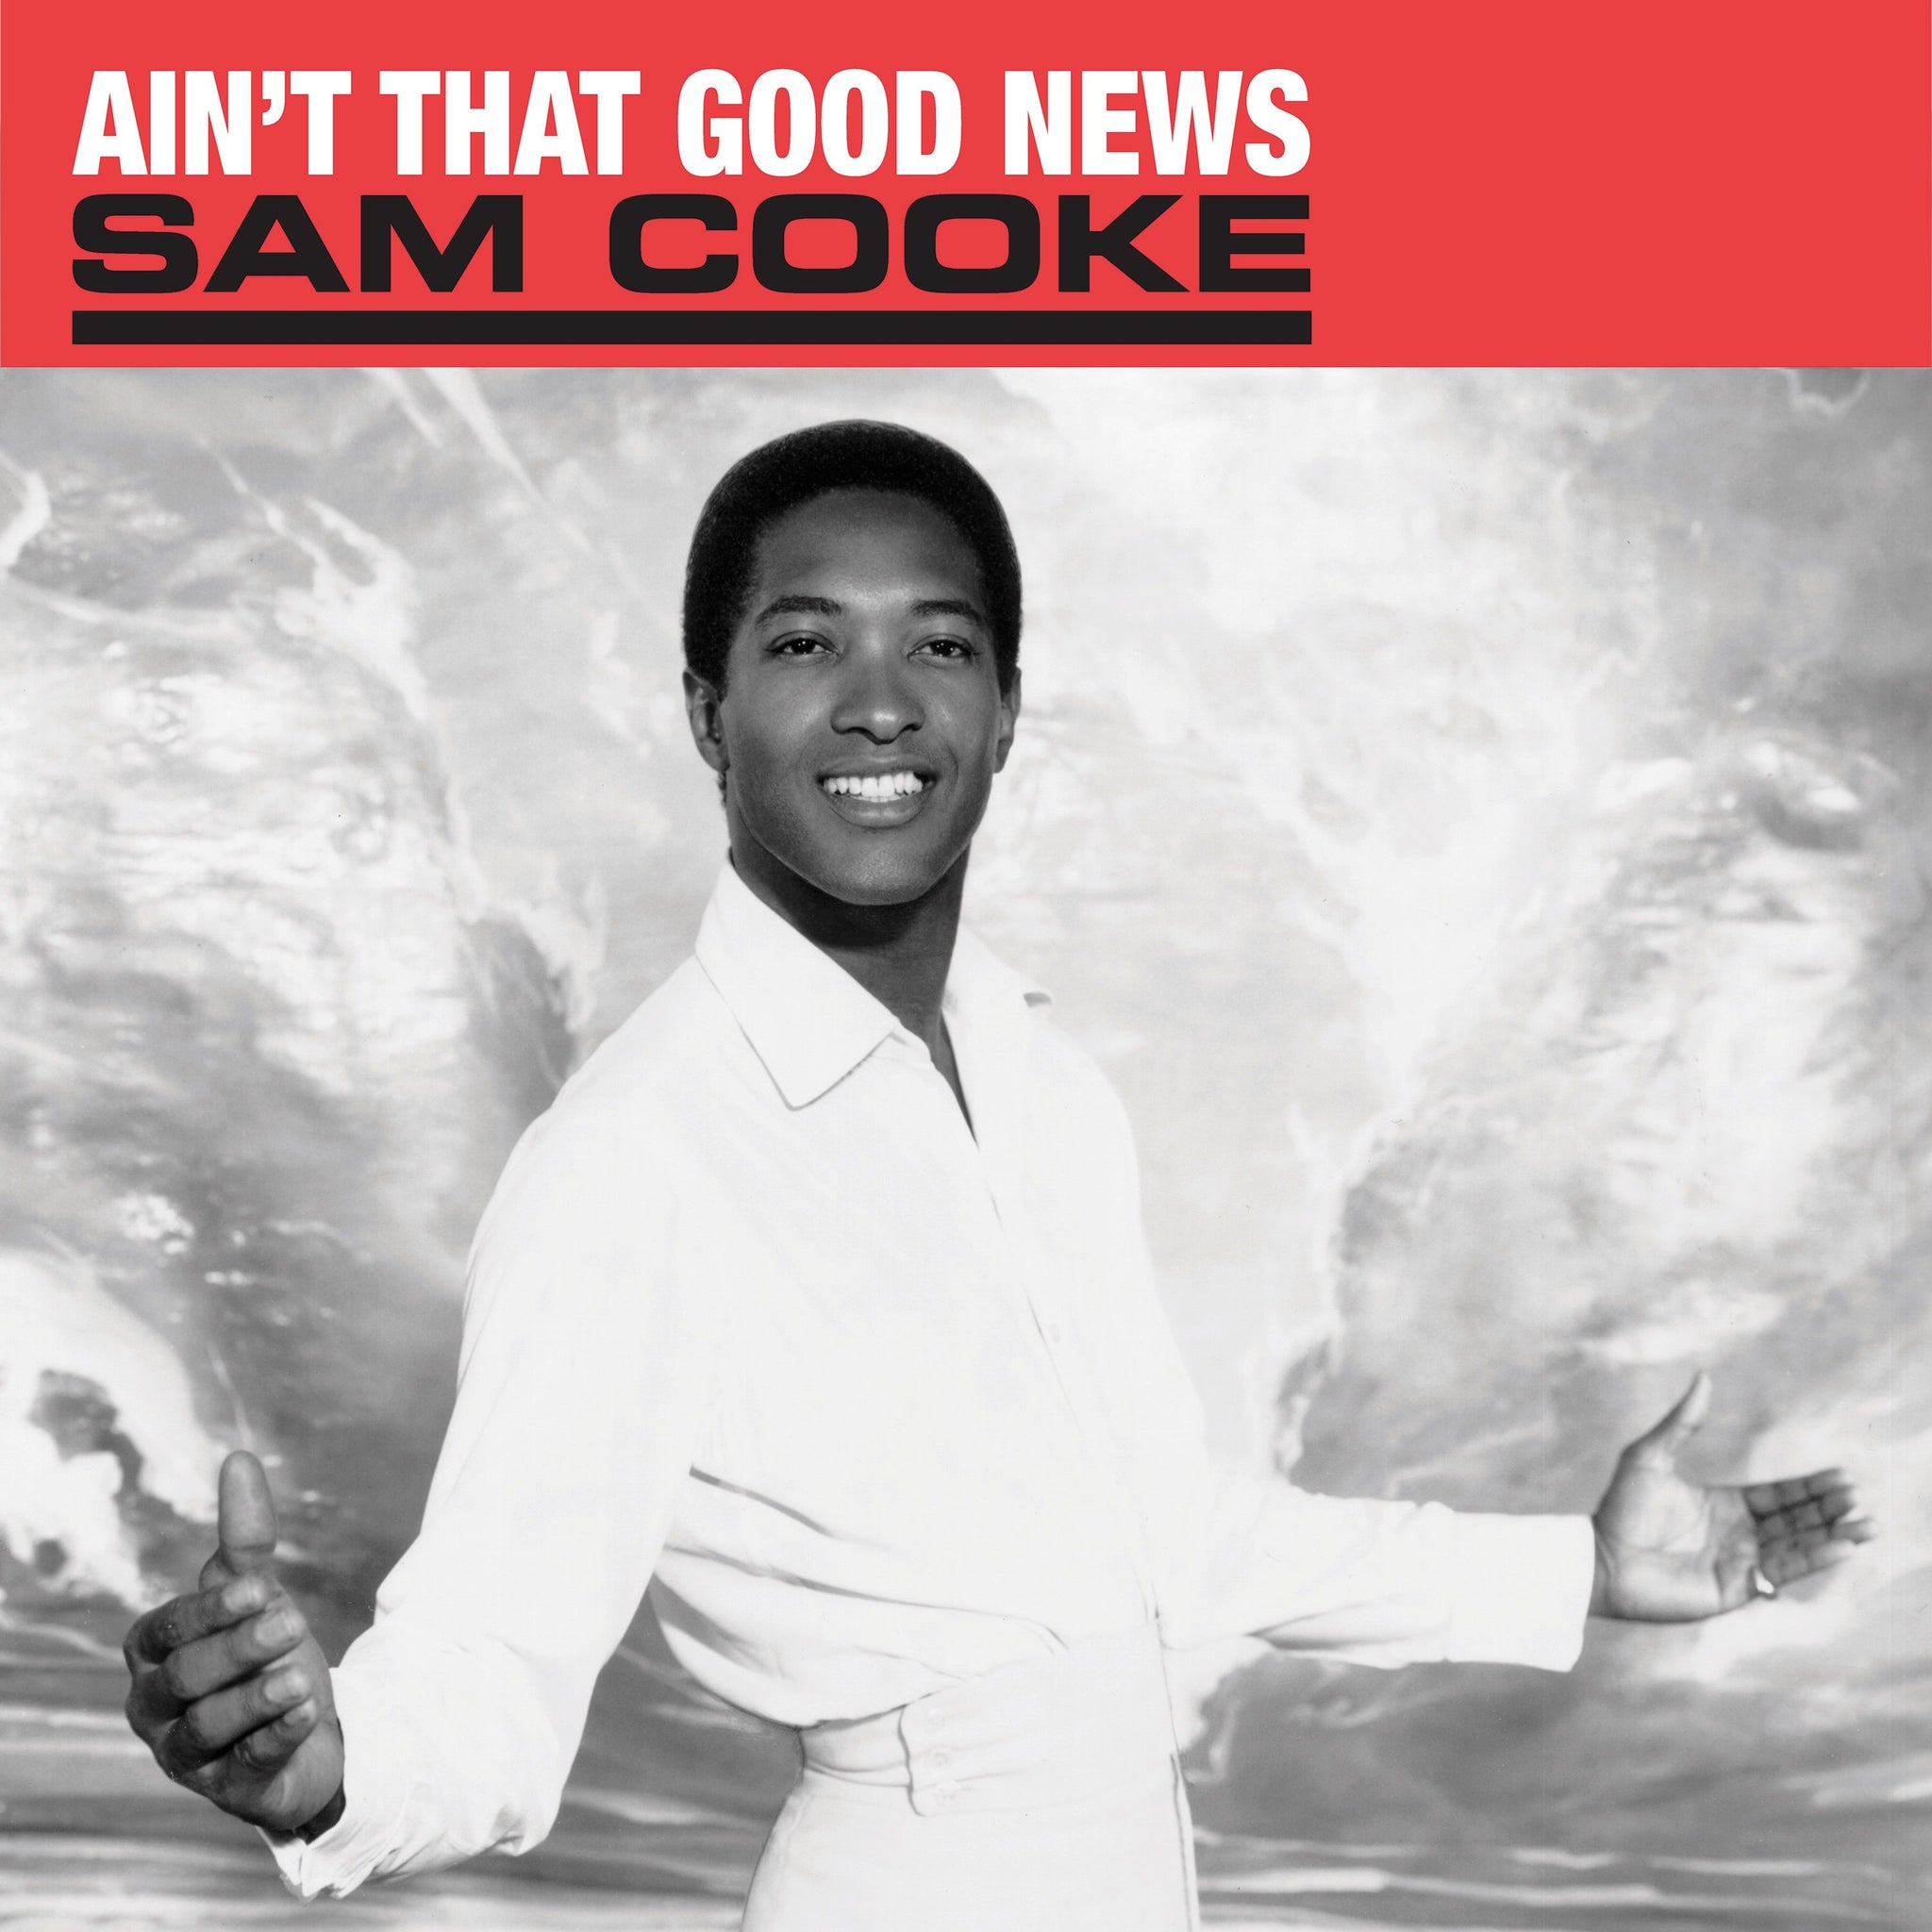 Sam Cooke "Ain't That Good News" [1xLP 180g Black Vinyl][Official Sam Cooke Release]